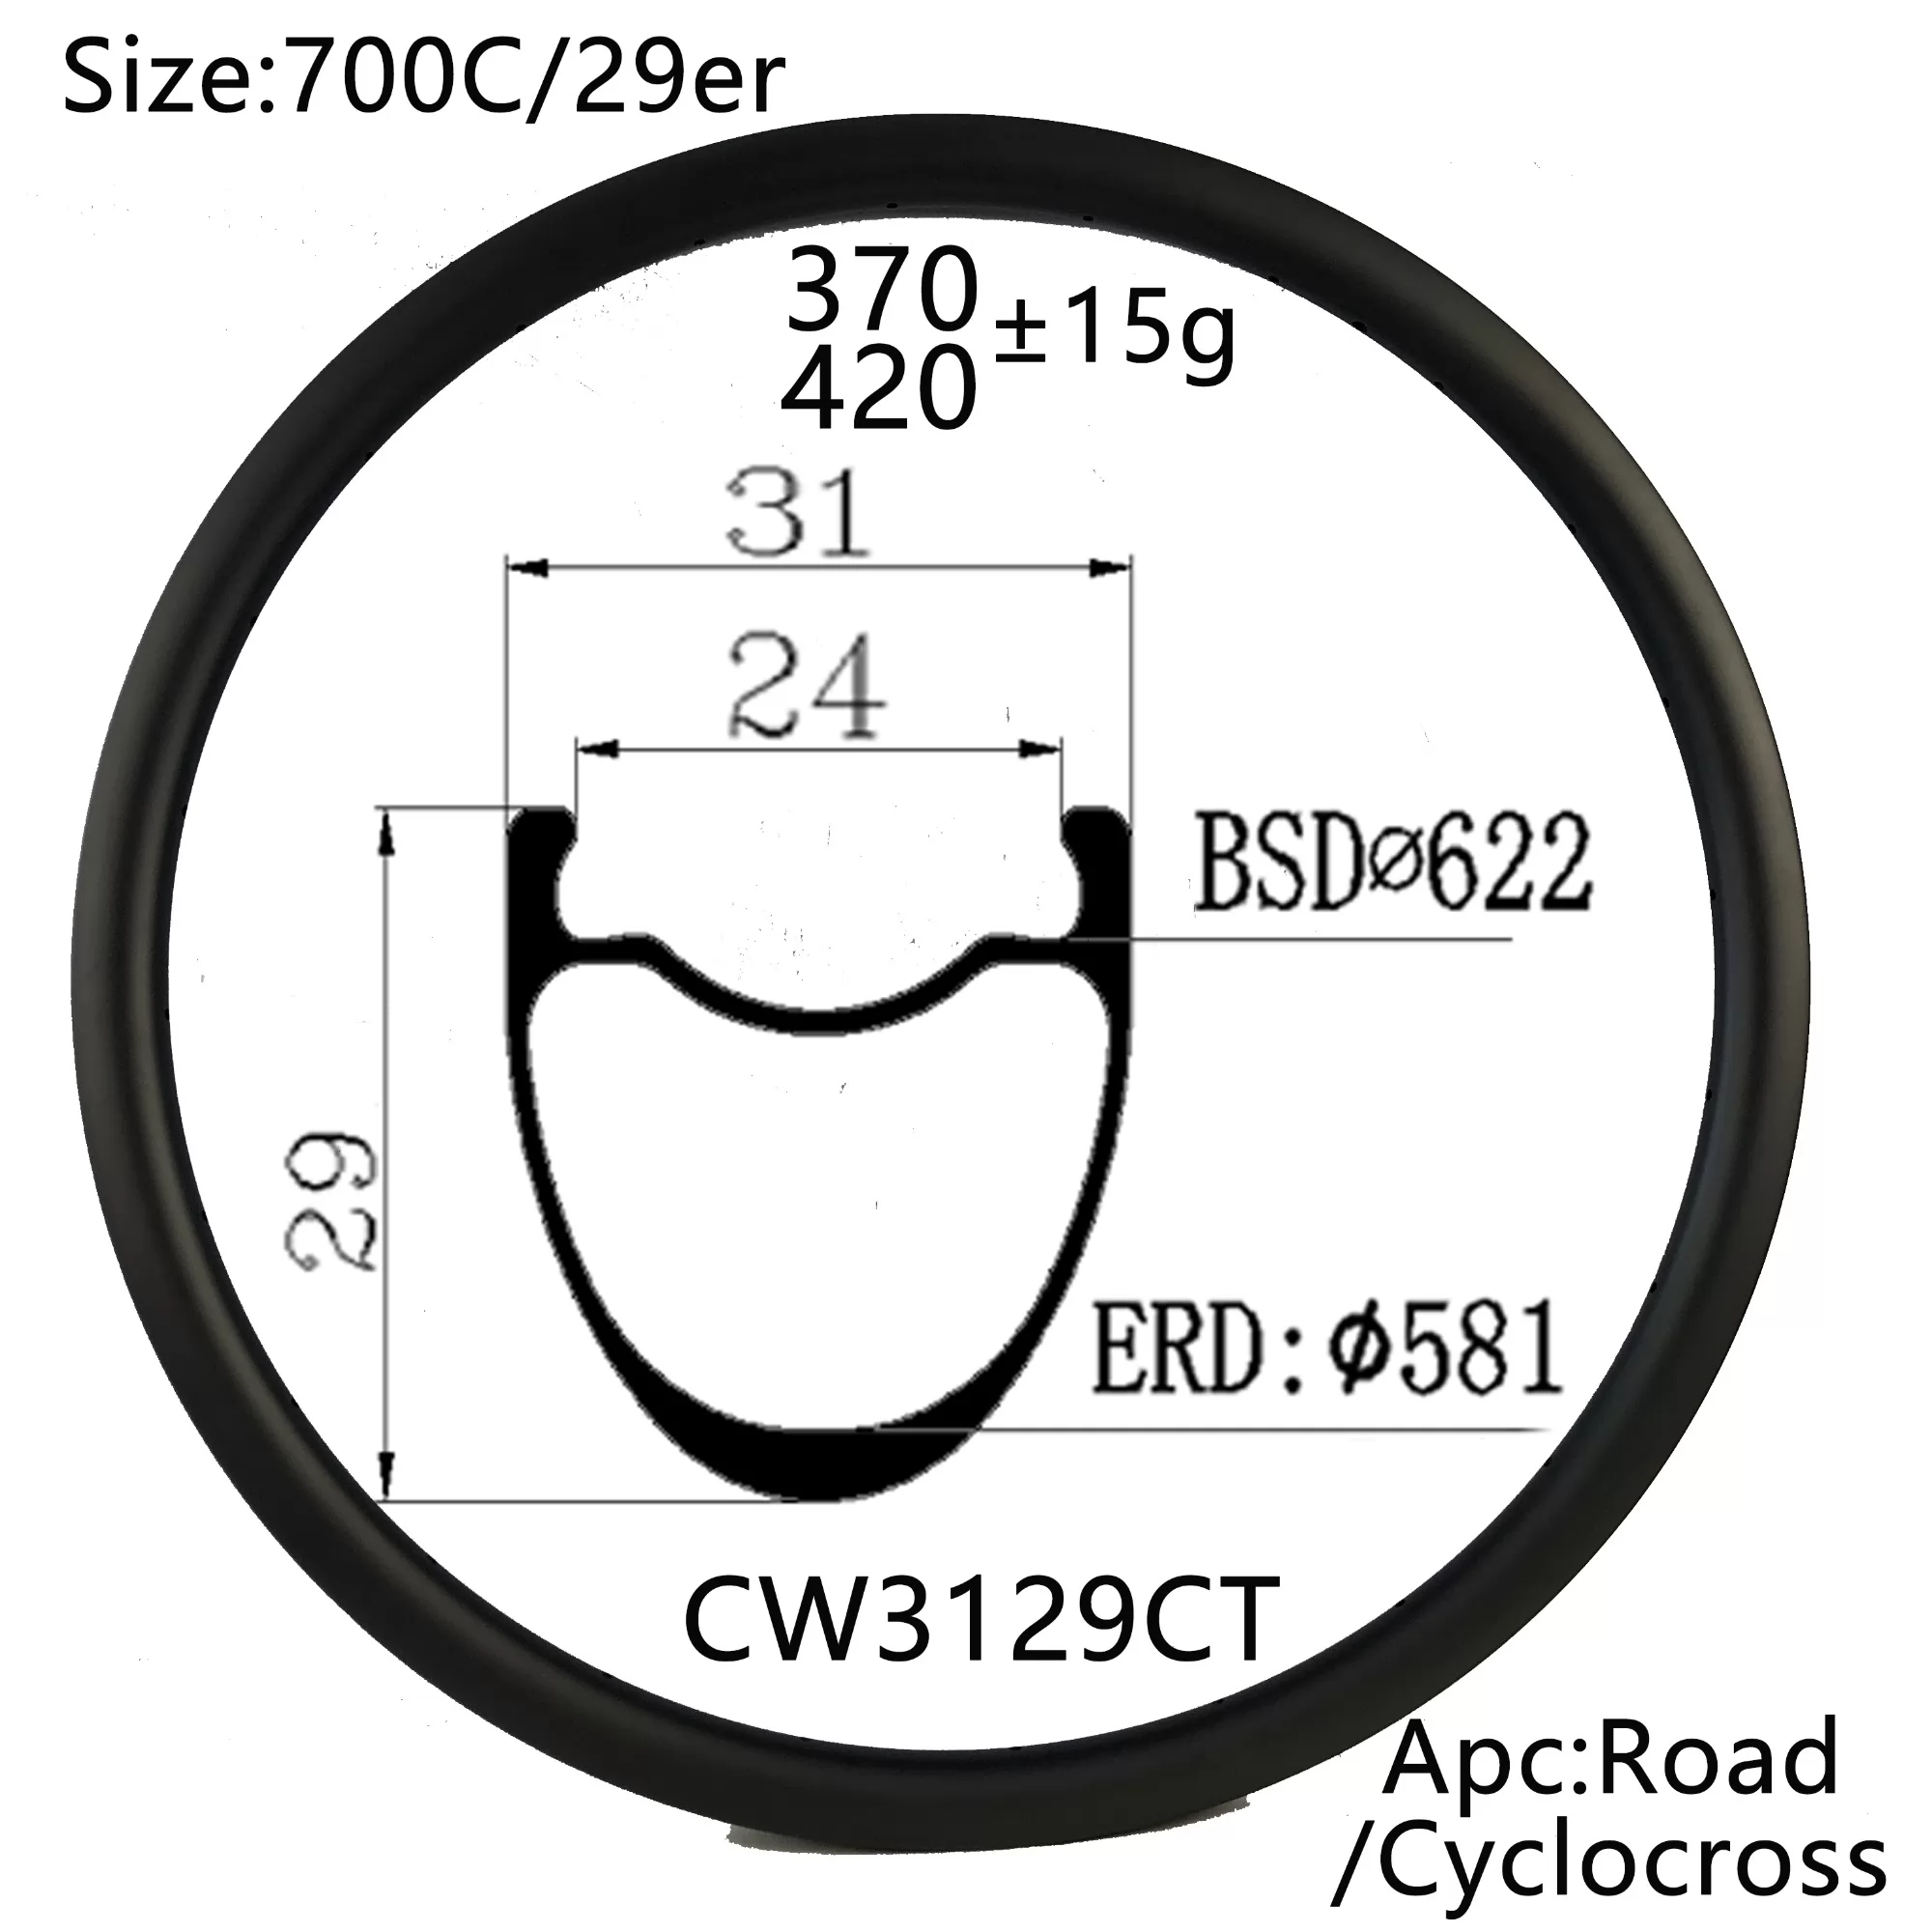 |CW3129T/C/CT| all road carbon bike rims 31mm width 29mm depth tubular/clincher/tubeless compatible V brake/Disc brake available